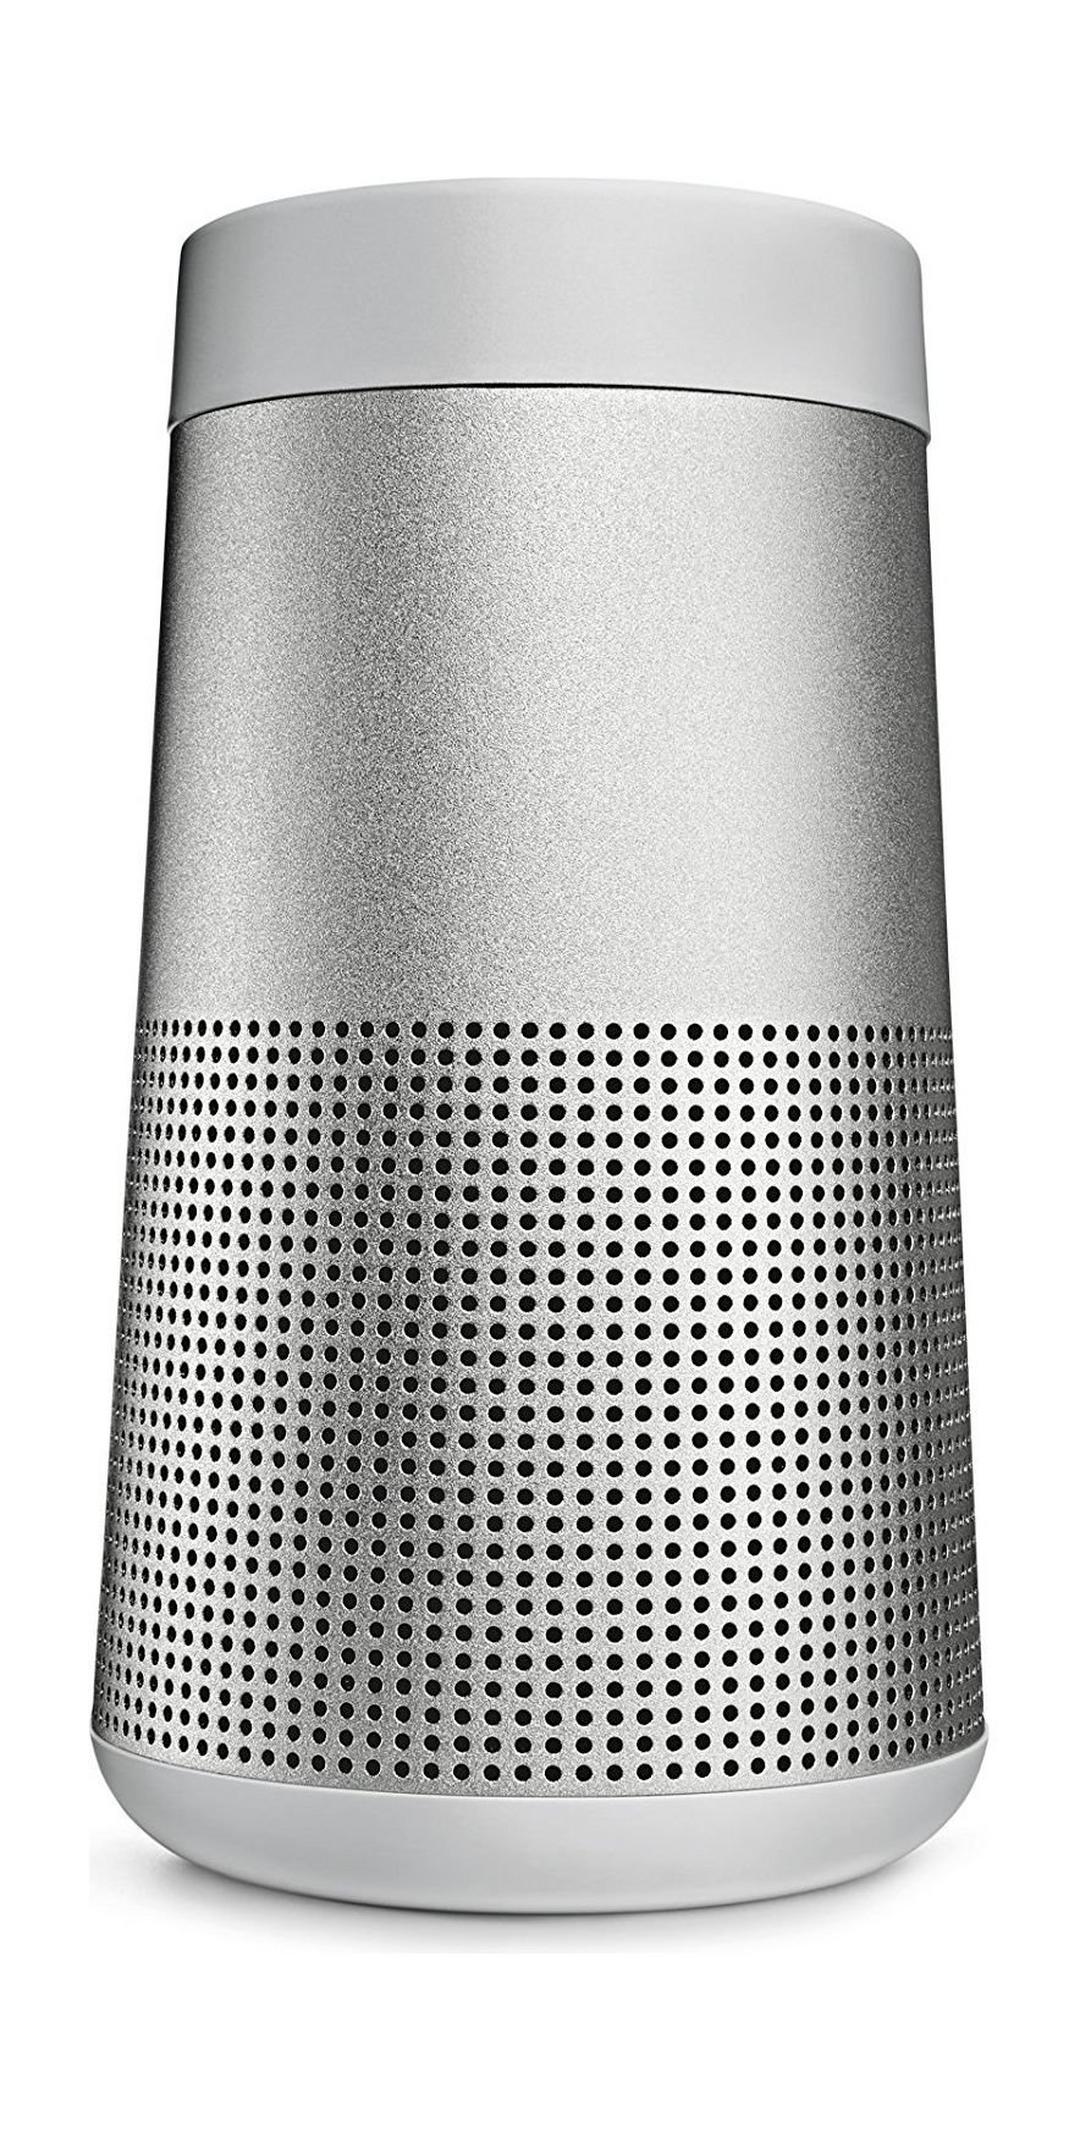 Bose SoundLink Revolve Wireless Speaker - Grey